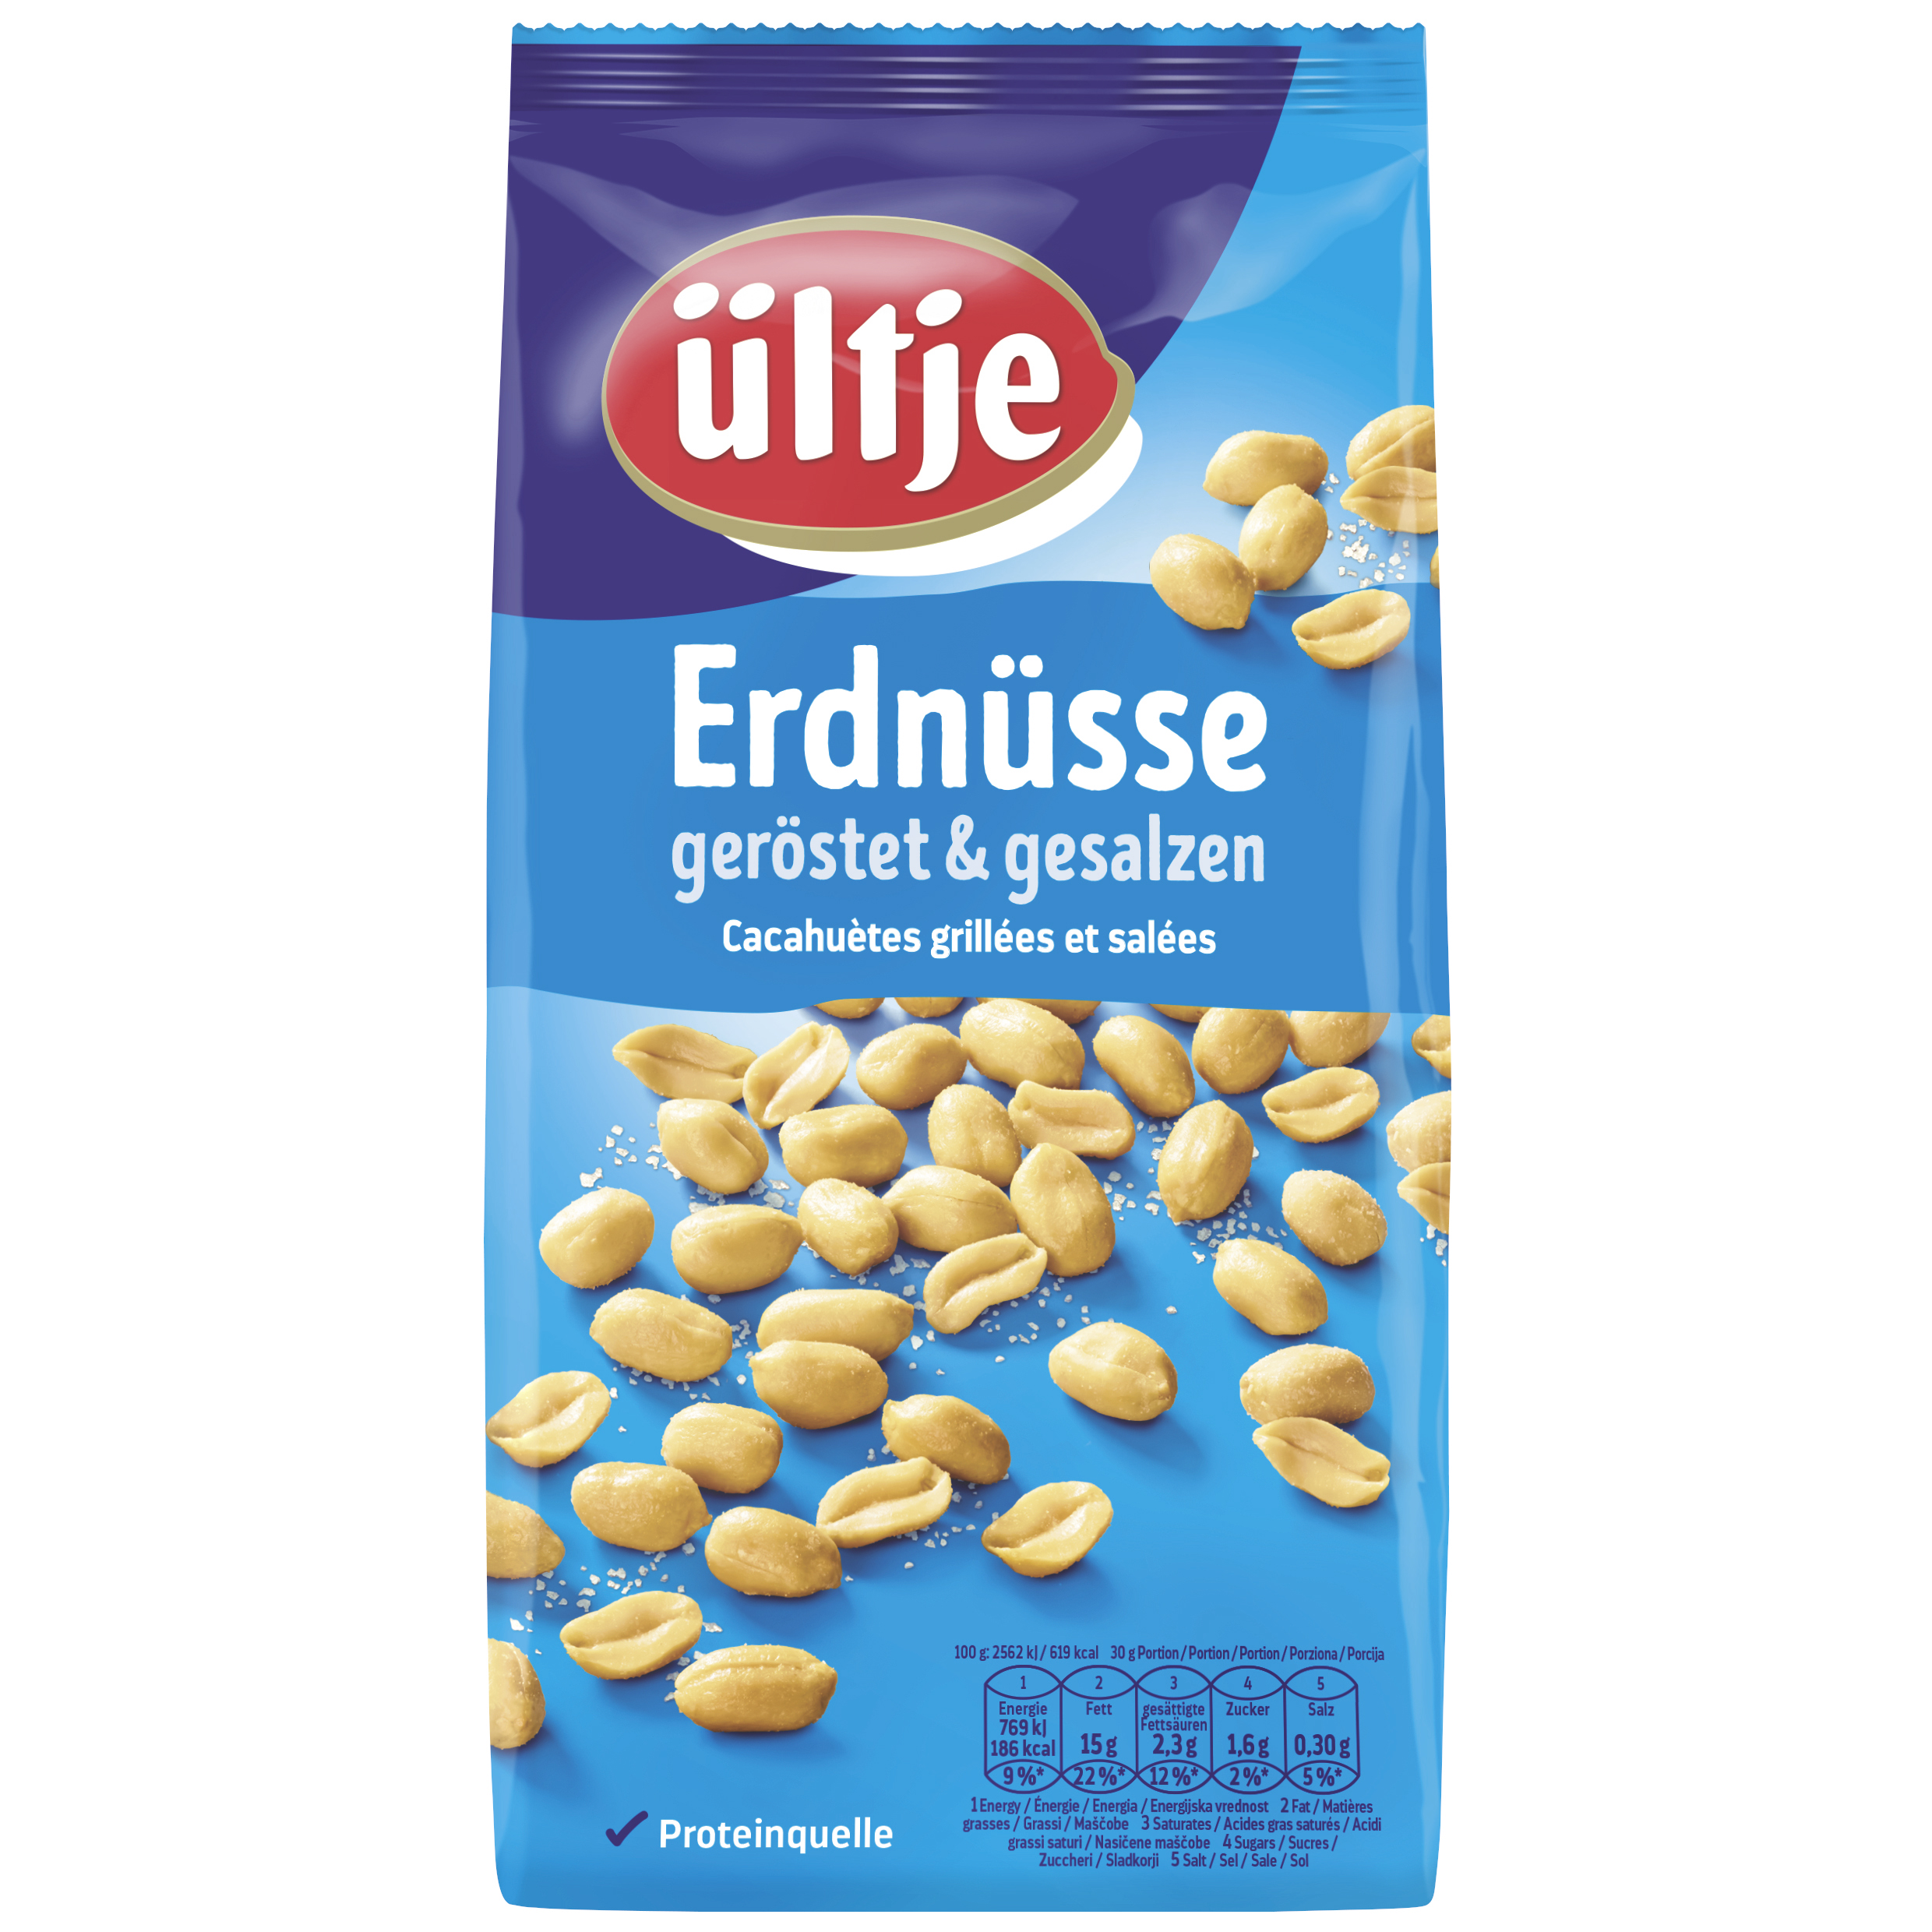 ültje Erdnüsse, geröstet & gesalzen, 1000g Beutel